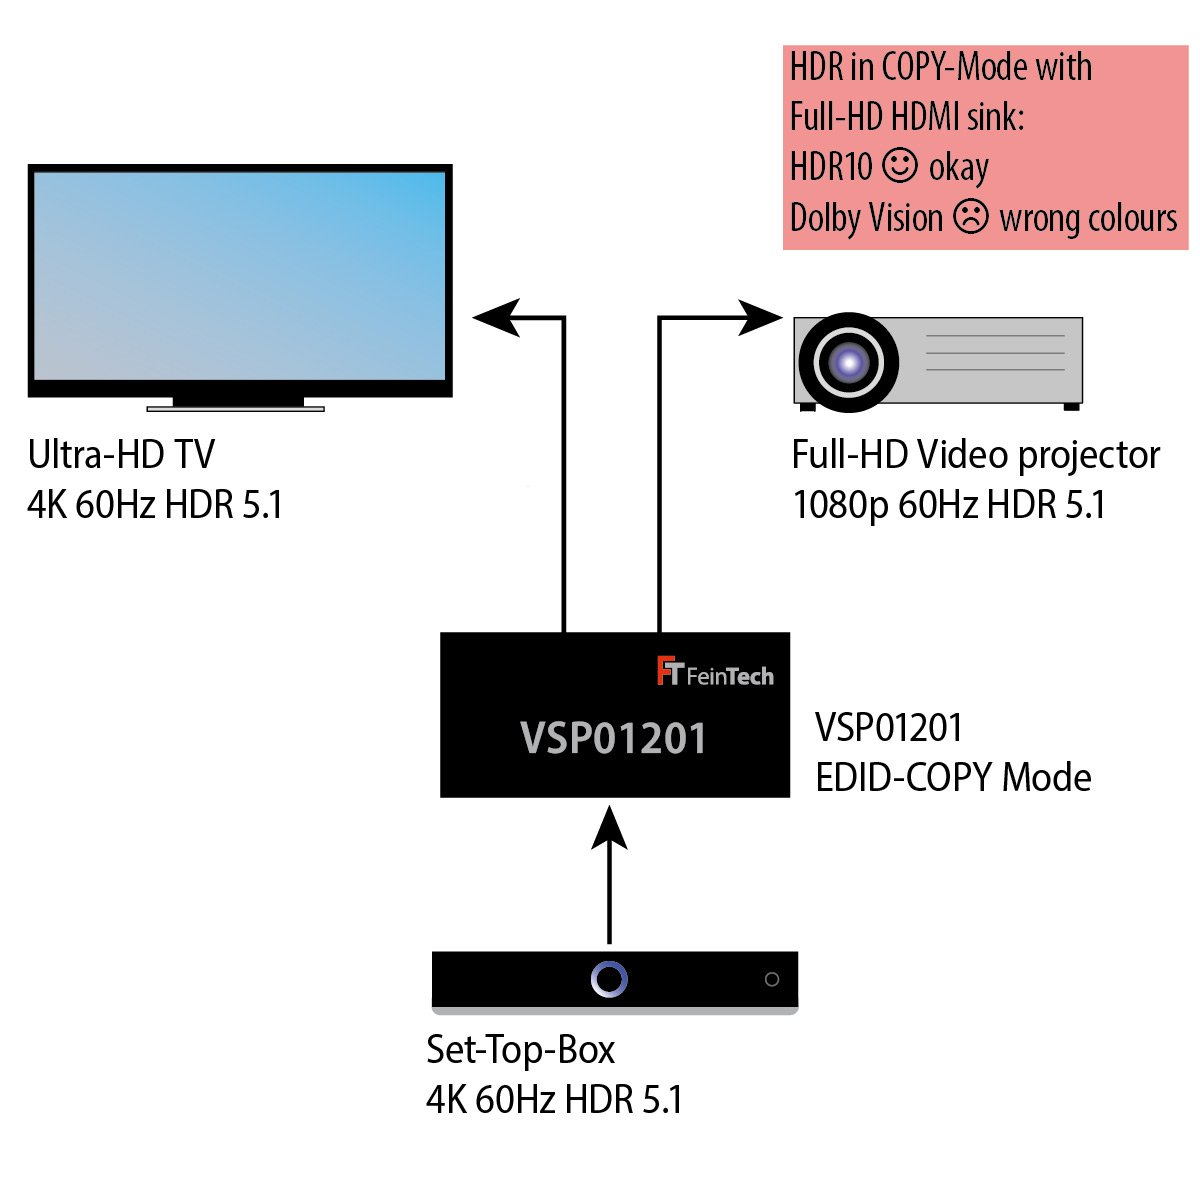 FEINTECH VSP01201 4K 60Hz HDMI 2.0 Splitter In 2 Out 1